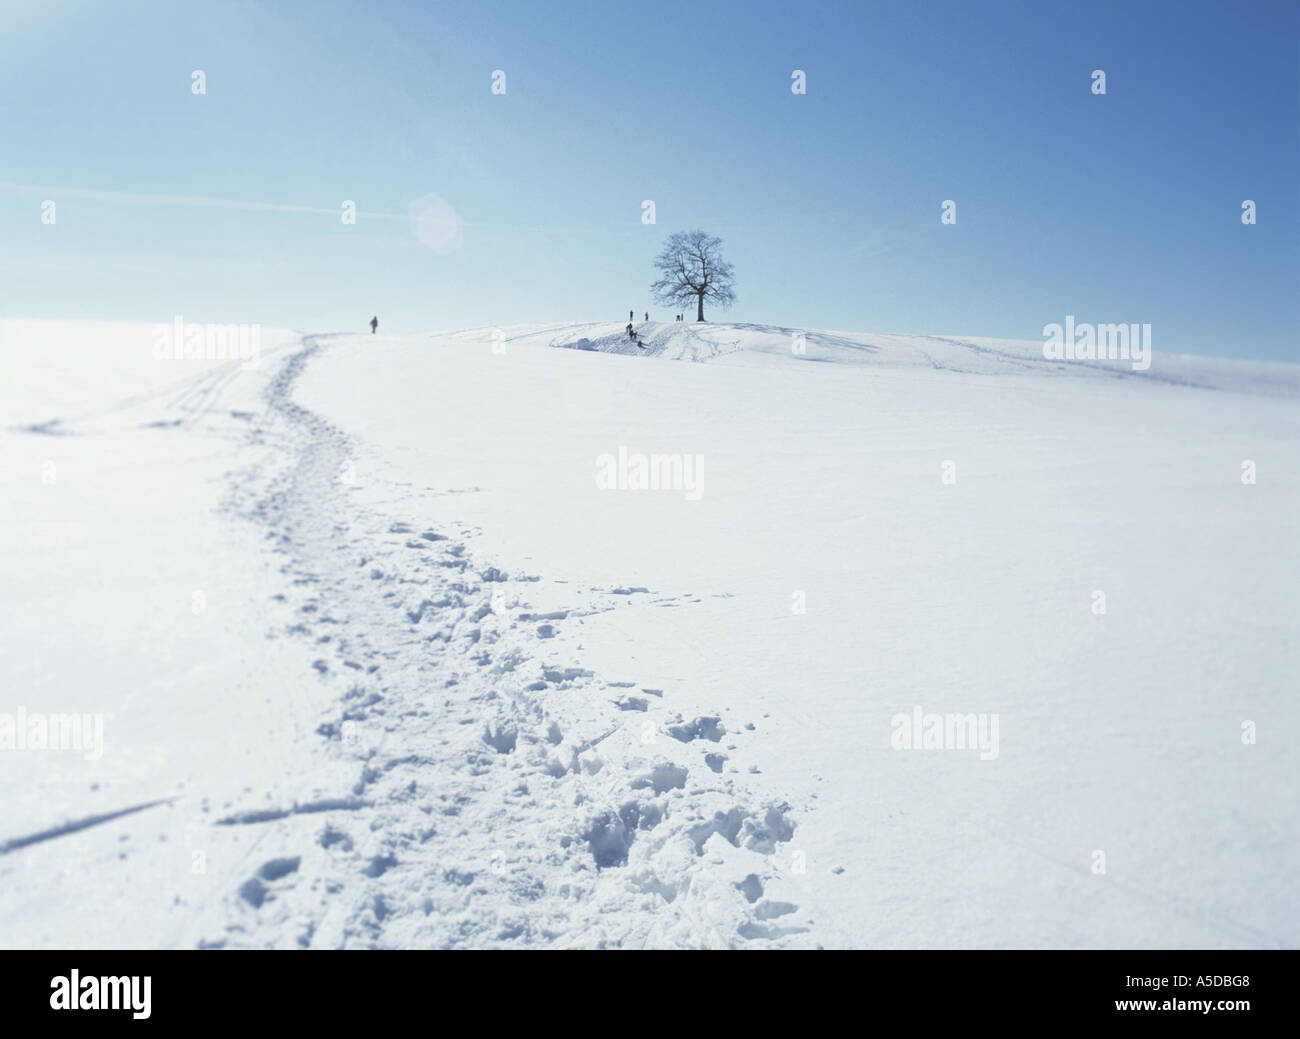 Allemagne, paysage d'hiver Banque D'Images